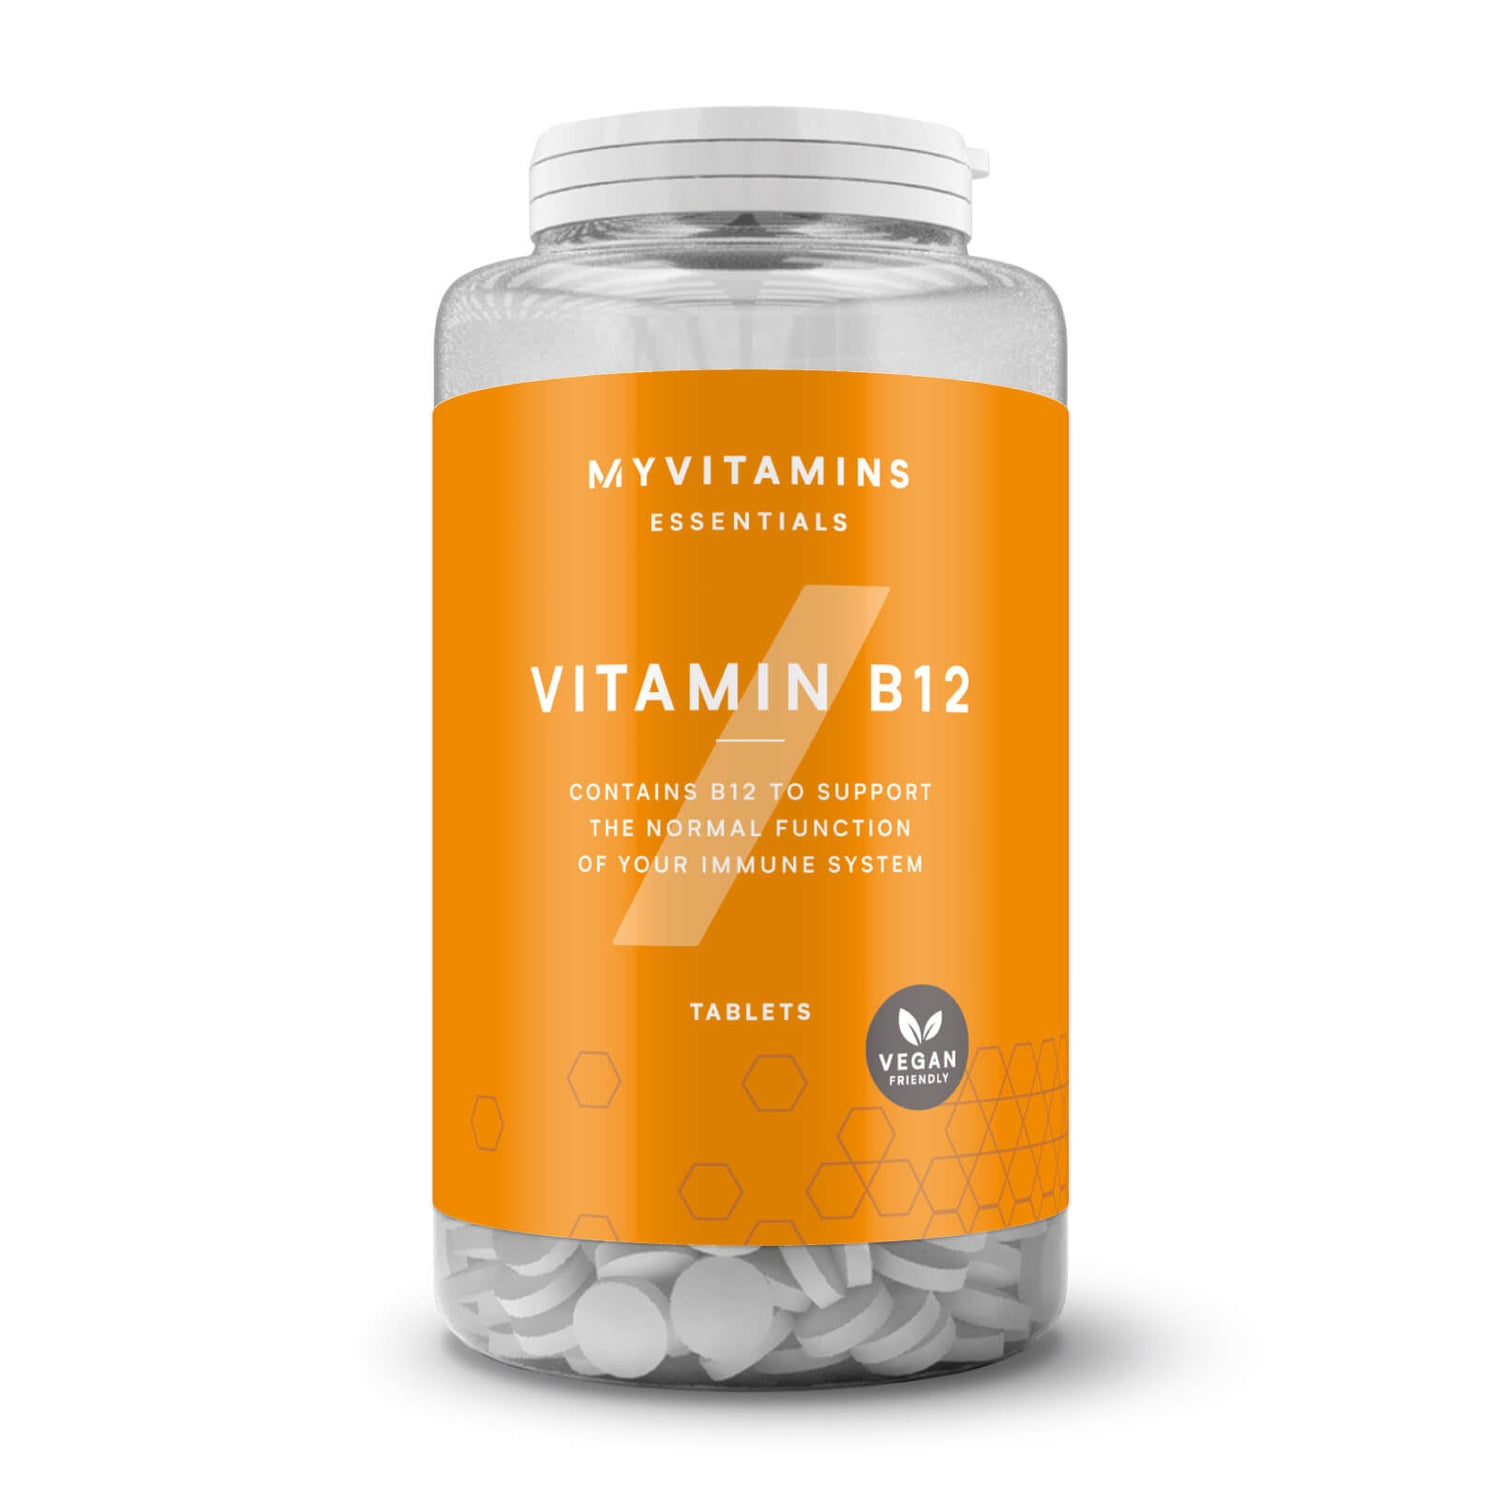 Myvitamins Vitamin B12 Tablets (CEE) - 60tabletid